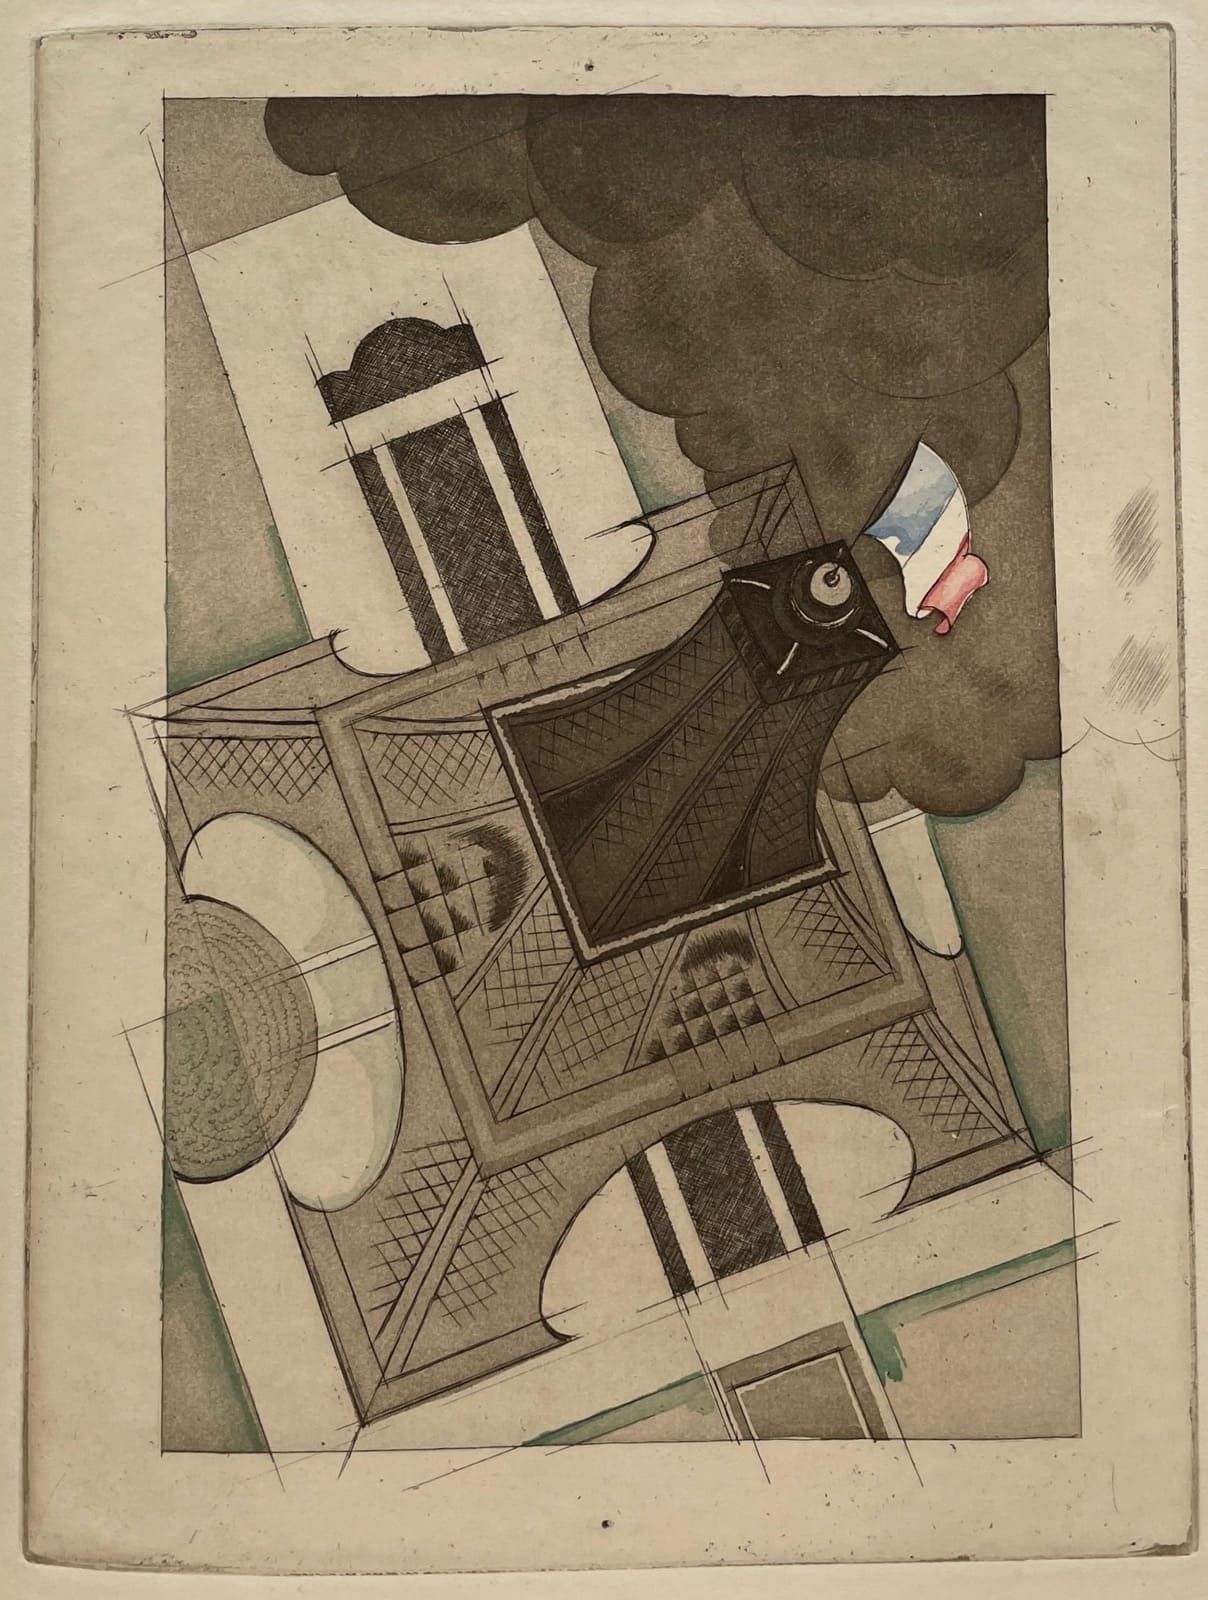 TABLEAUX de Paris. París, Émile-Paul Frères, 1927. En folio, encuadernado en rús&hellip;